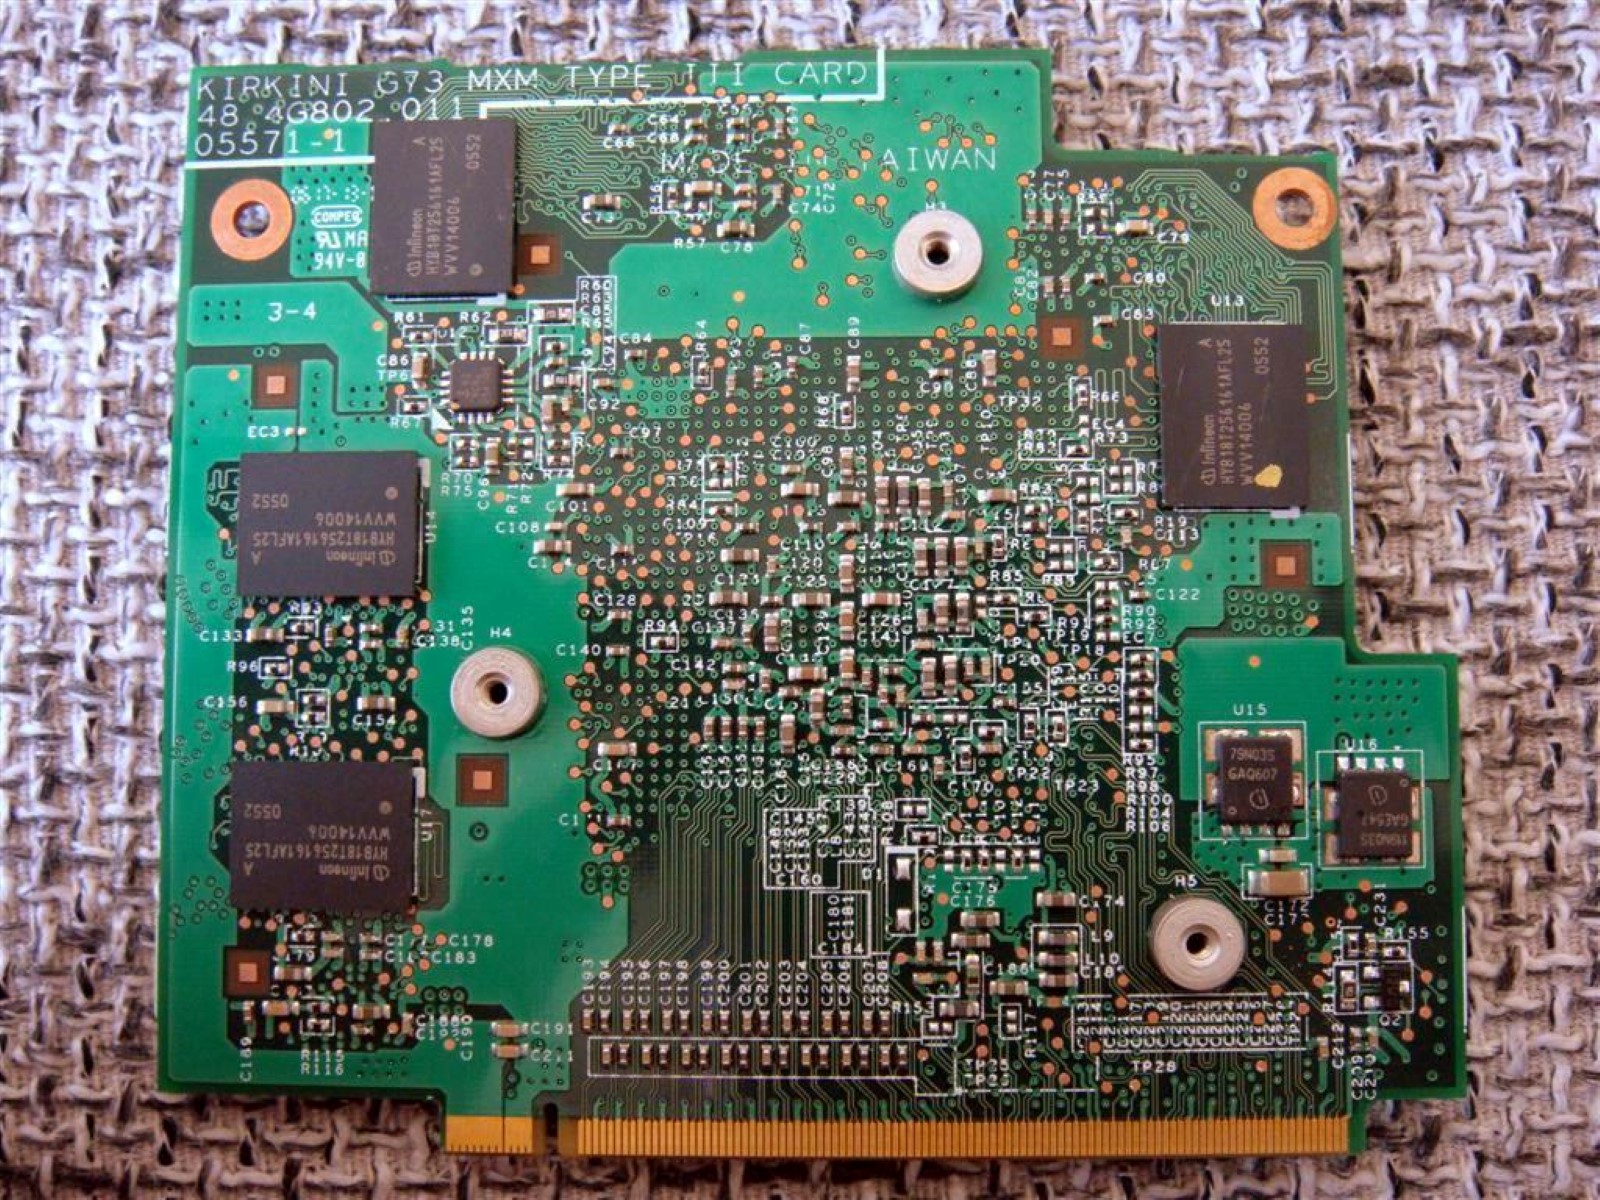 Acer As9510 TM6500 VGA CARD